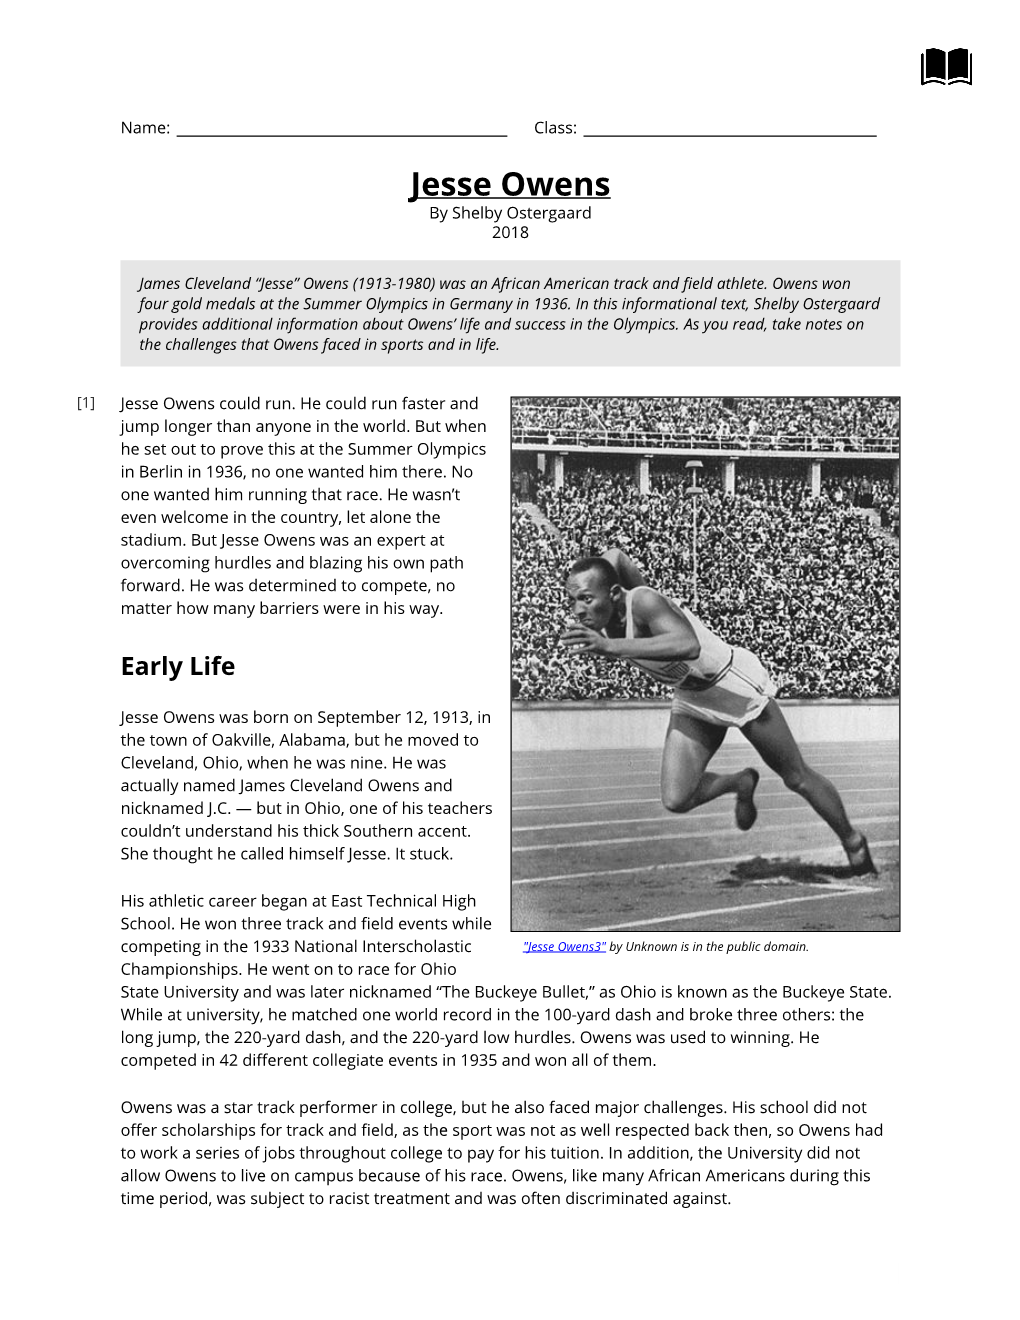 Jesse Owens by Shelby Ostergaard 2018